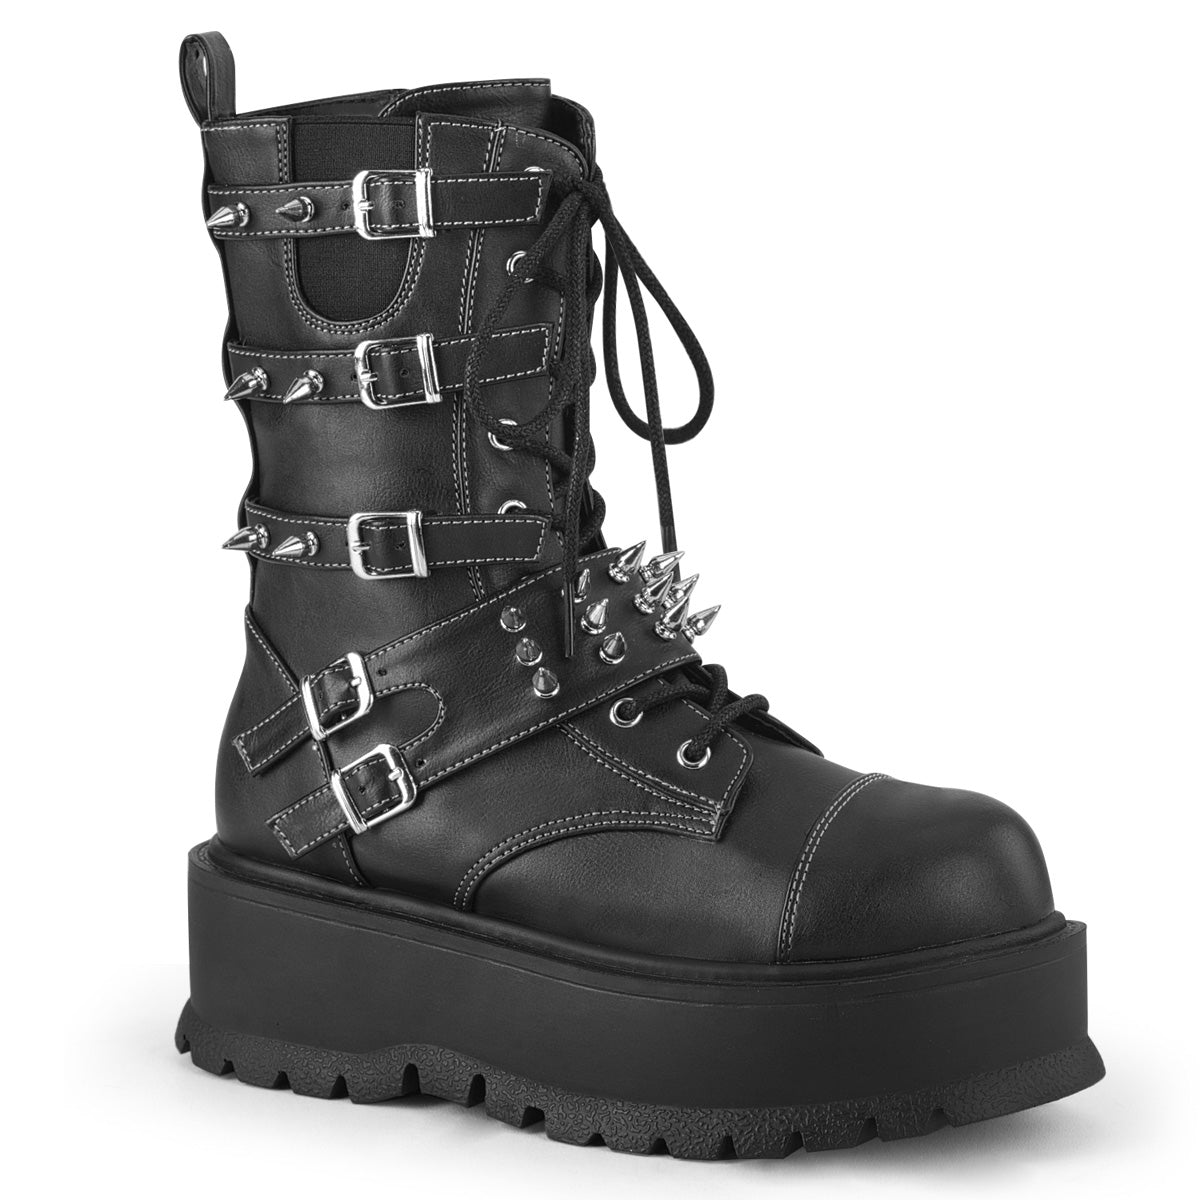 DEMONIA "Slacker-165" Boots - Black Vegan Leather